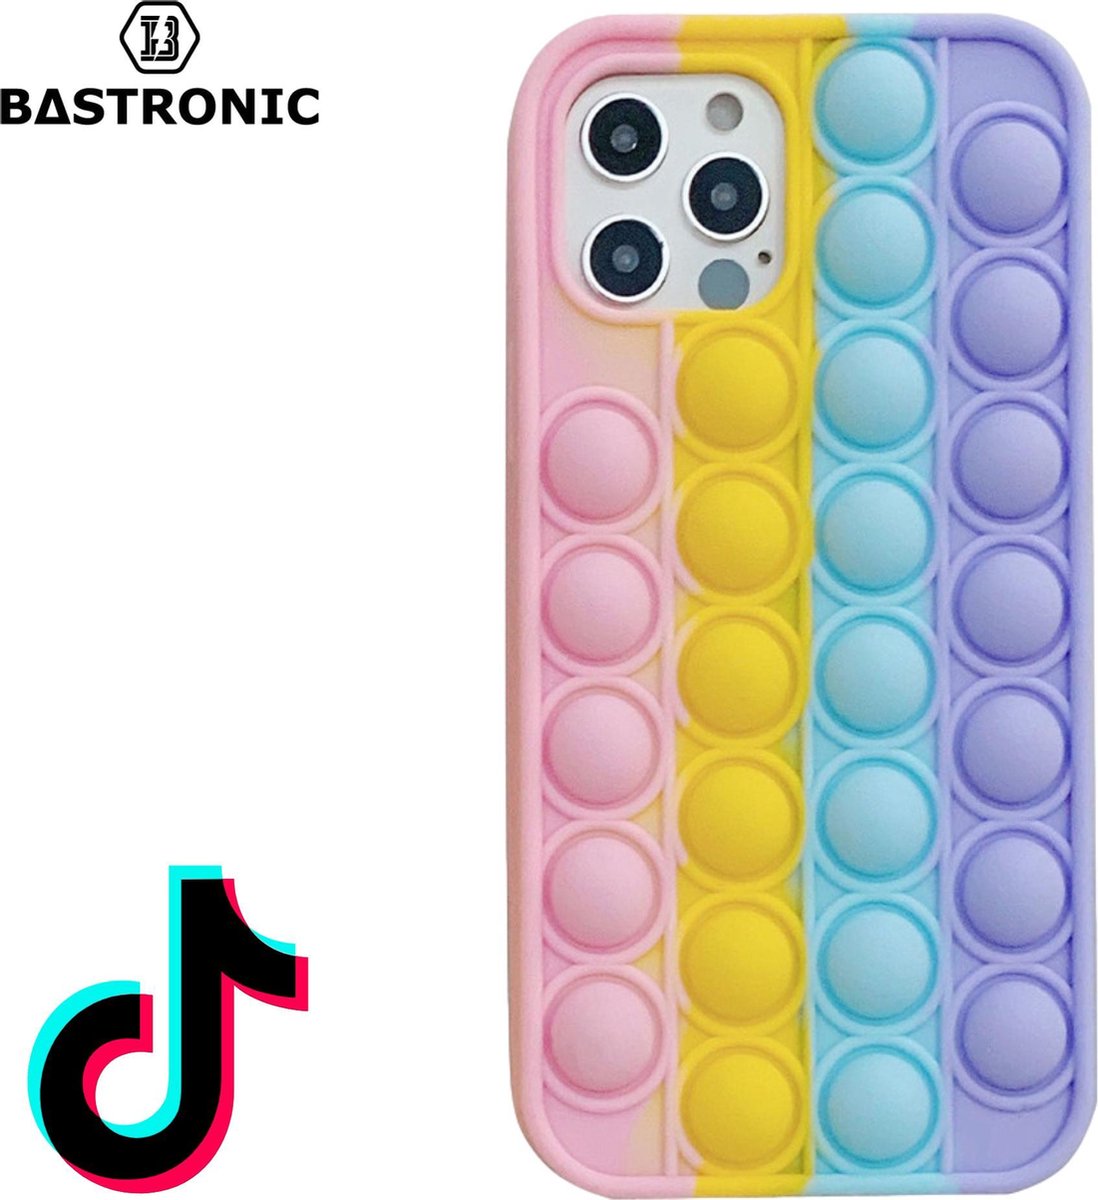 Pop It Telefoonhoesje – iPhone SE 2020 Hoesje – iPhone 8 Hoesje – iPhone 7 Hoesje – Pop It Fidget Toy – Pop It – Regenboog – Phone Case – Bekend van TikTok – Bastronic® - Bastronic